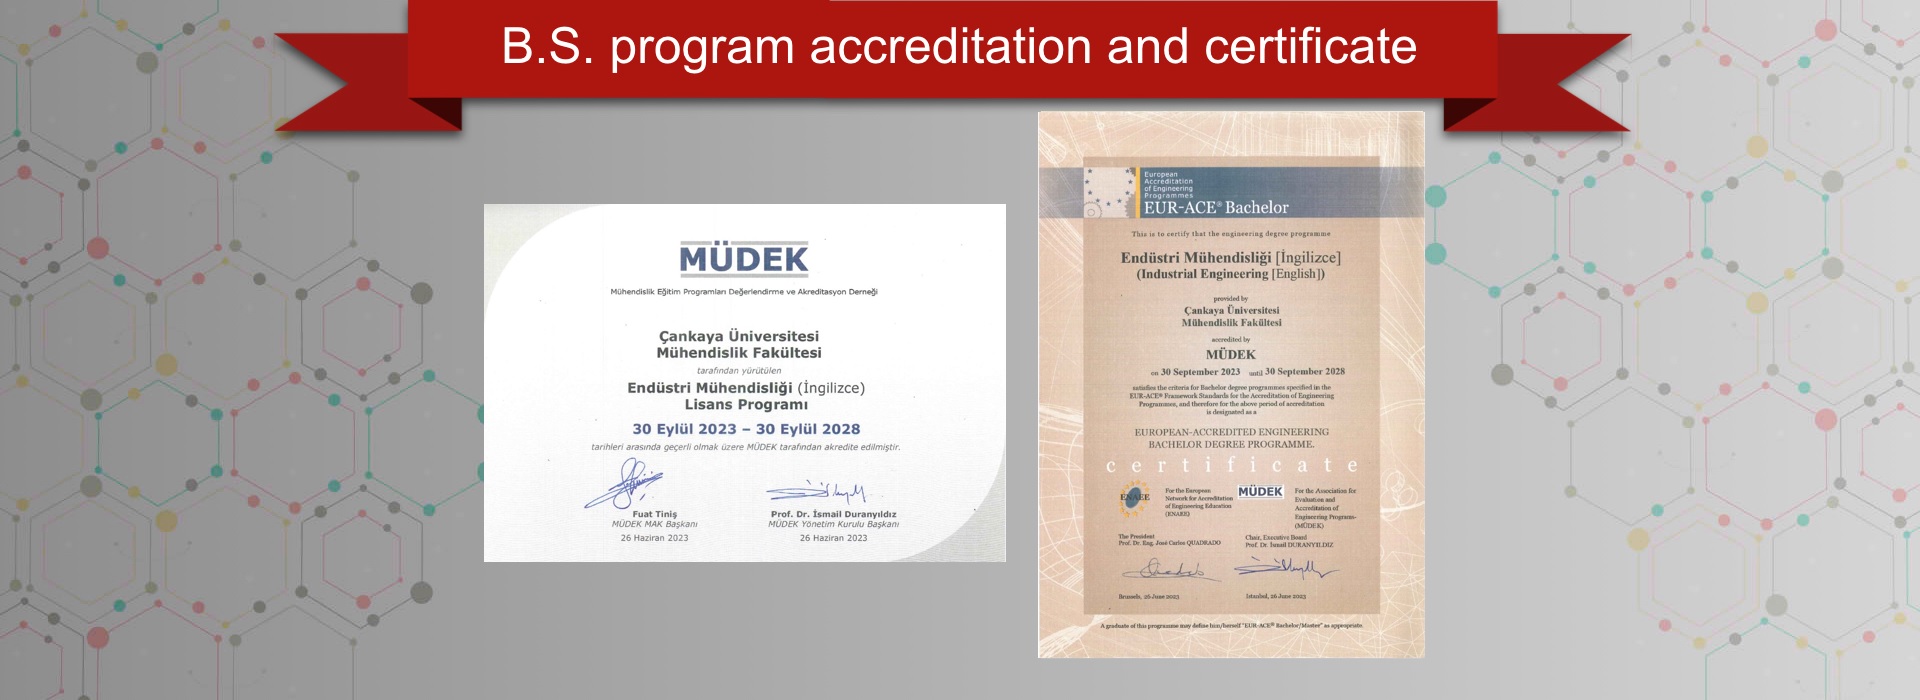 MÜDEK accreditation